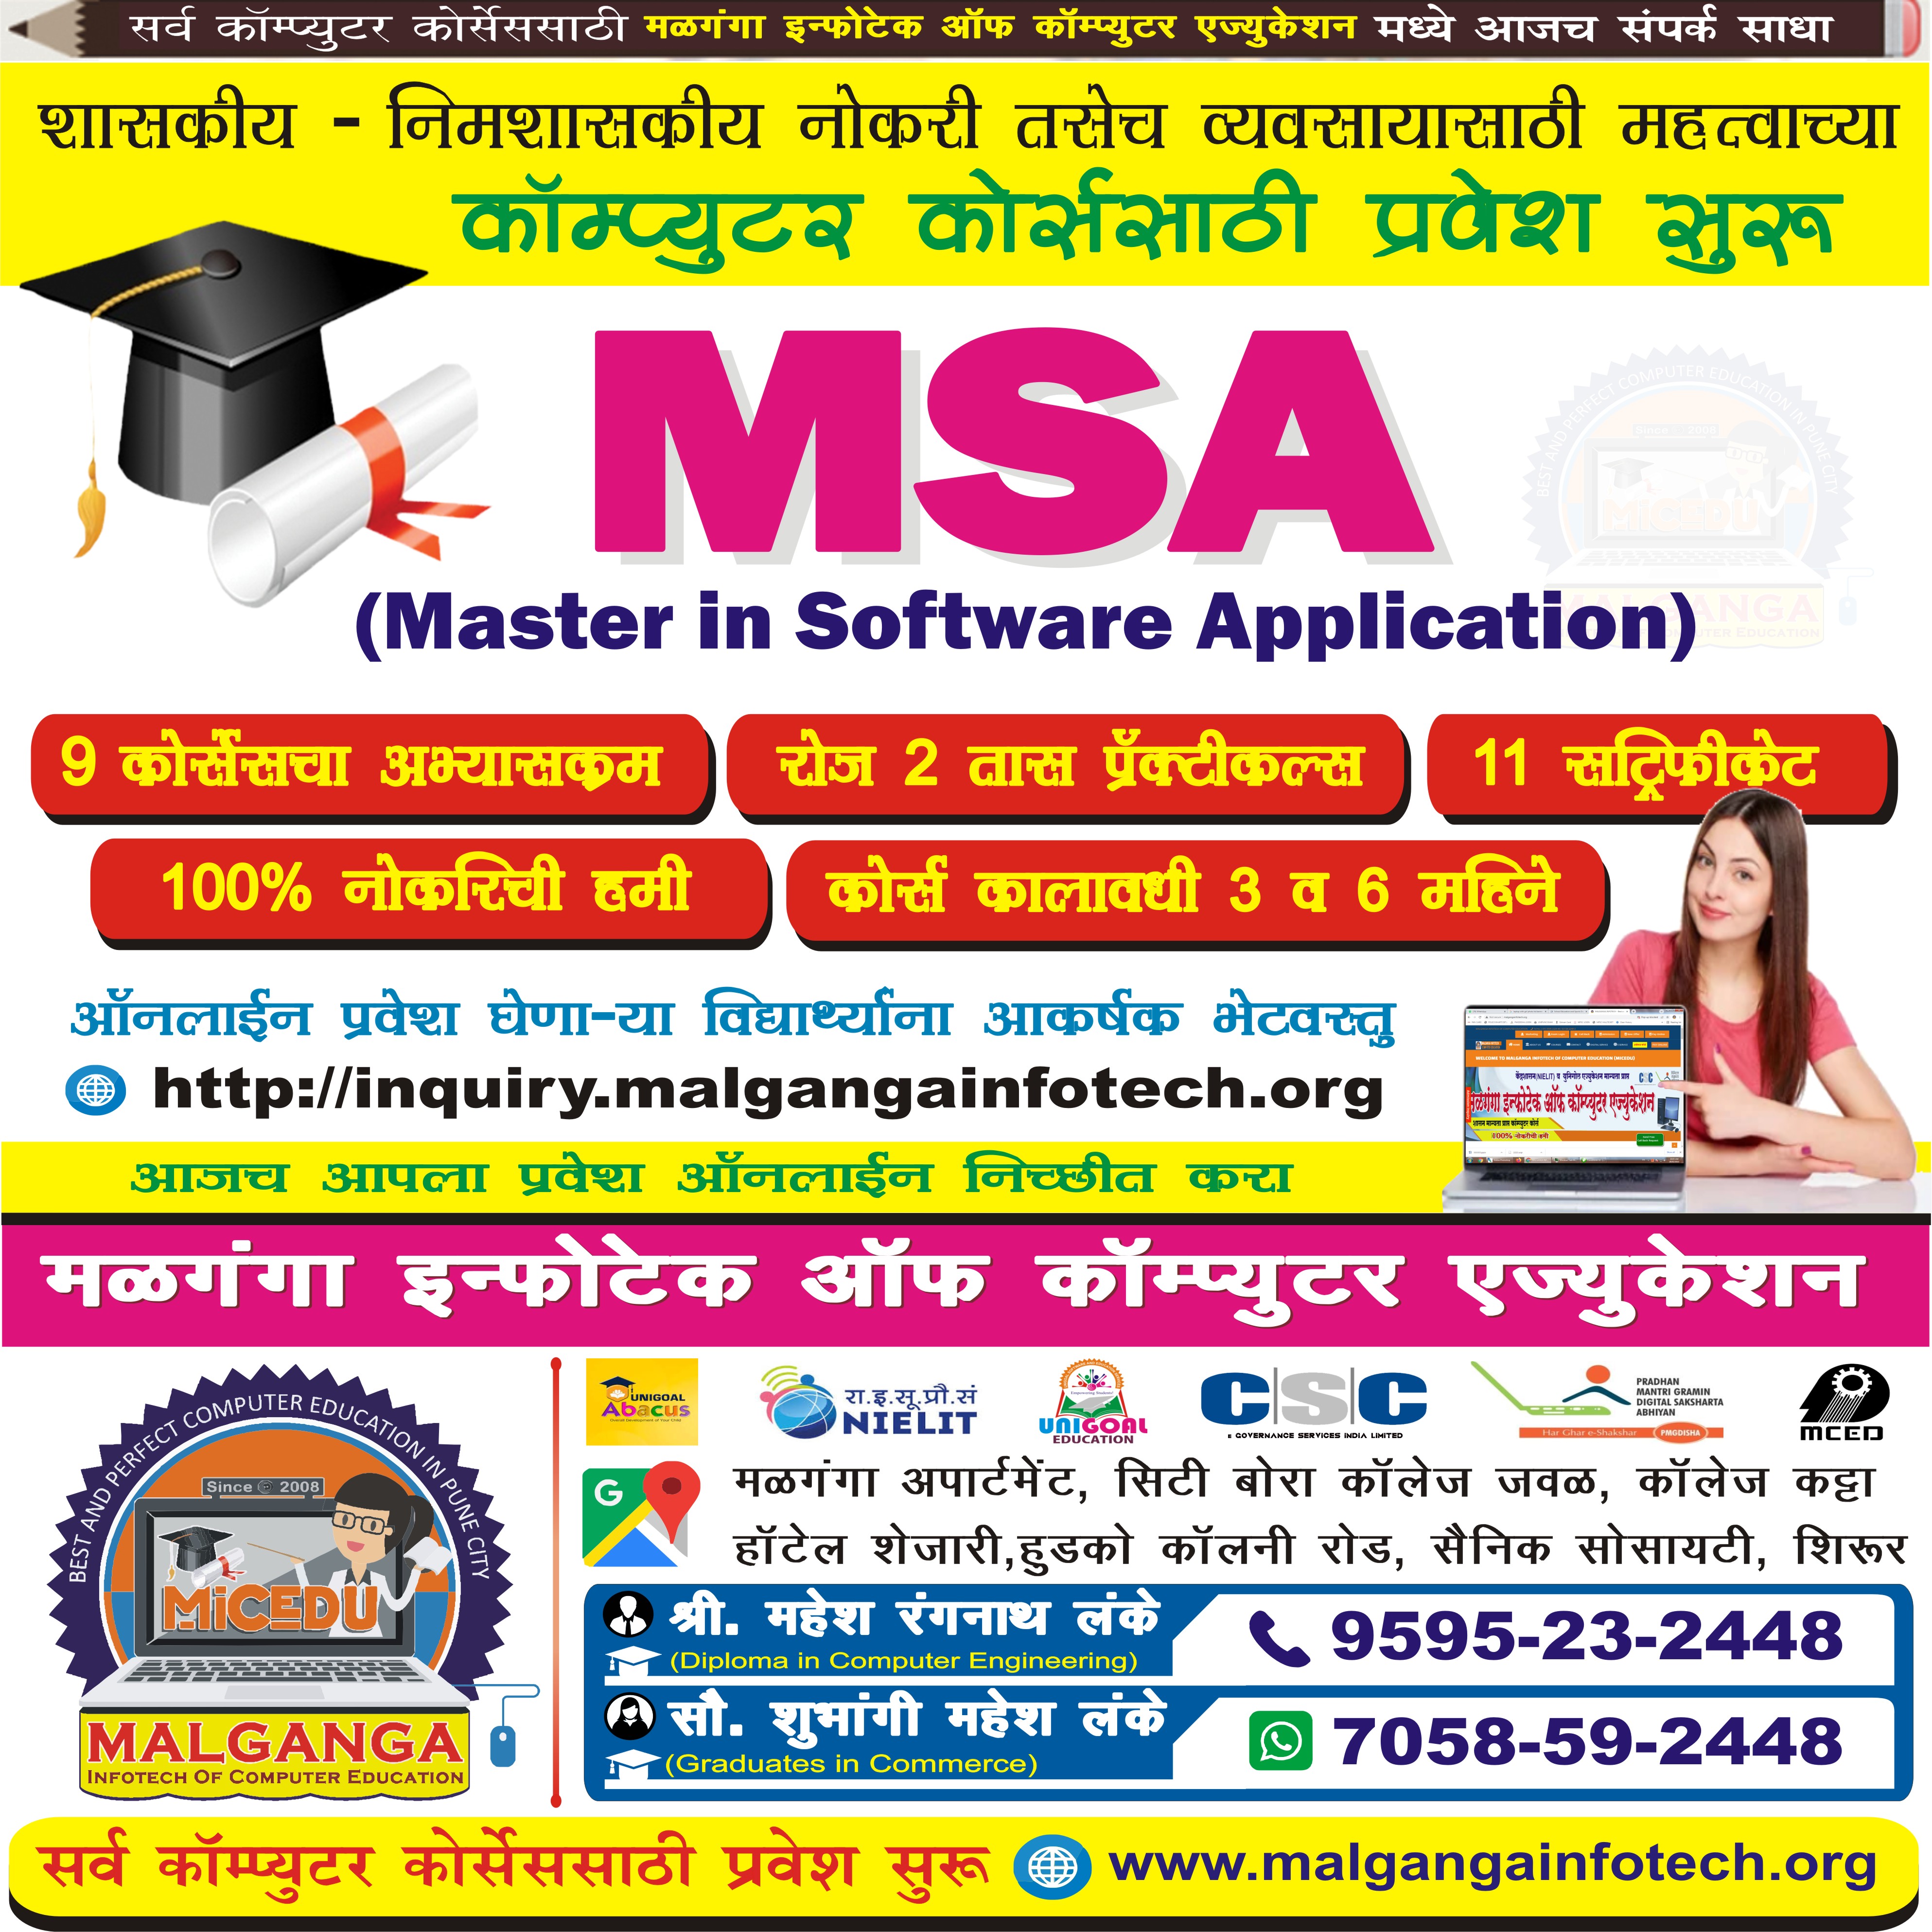 Malganga Infotech of Computer Education & MICEDU SHIRUR - Best and Perfect Computer Education